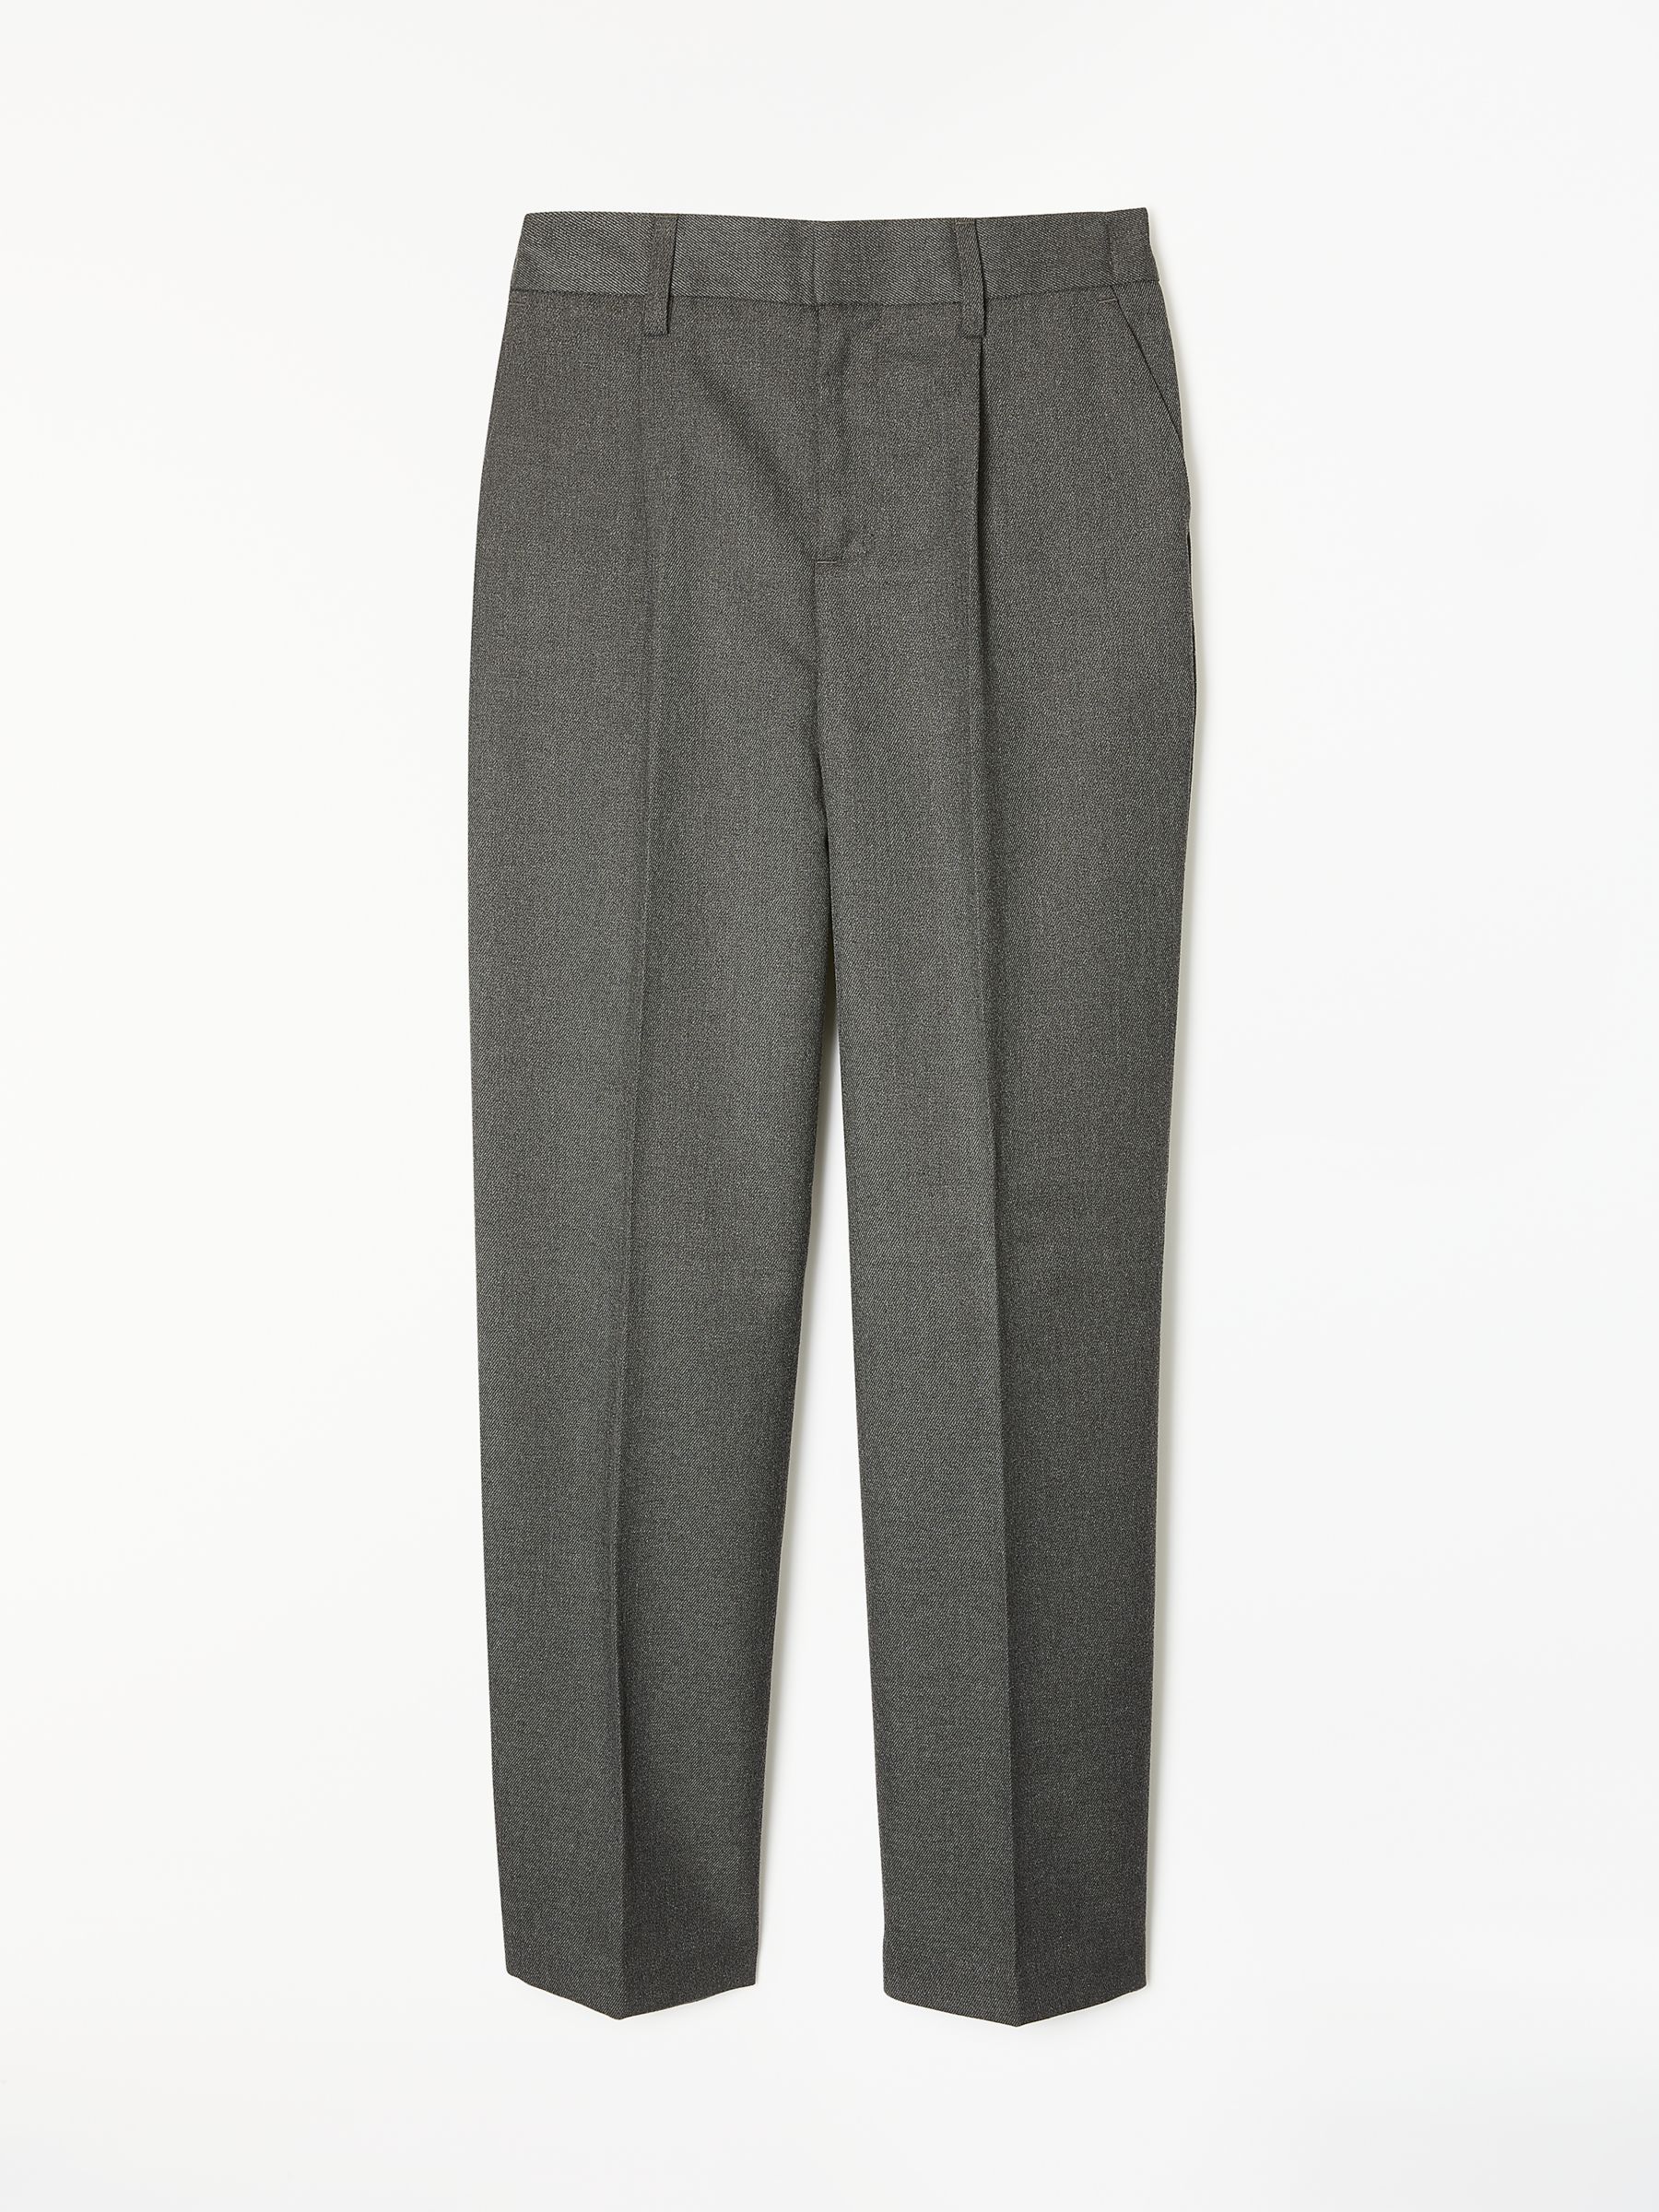 John Lewis Boys' Regular Fit Adjustable Waist School Trousers, Grey, 3 years